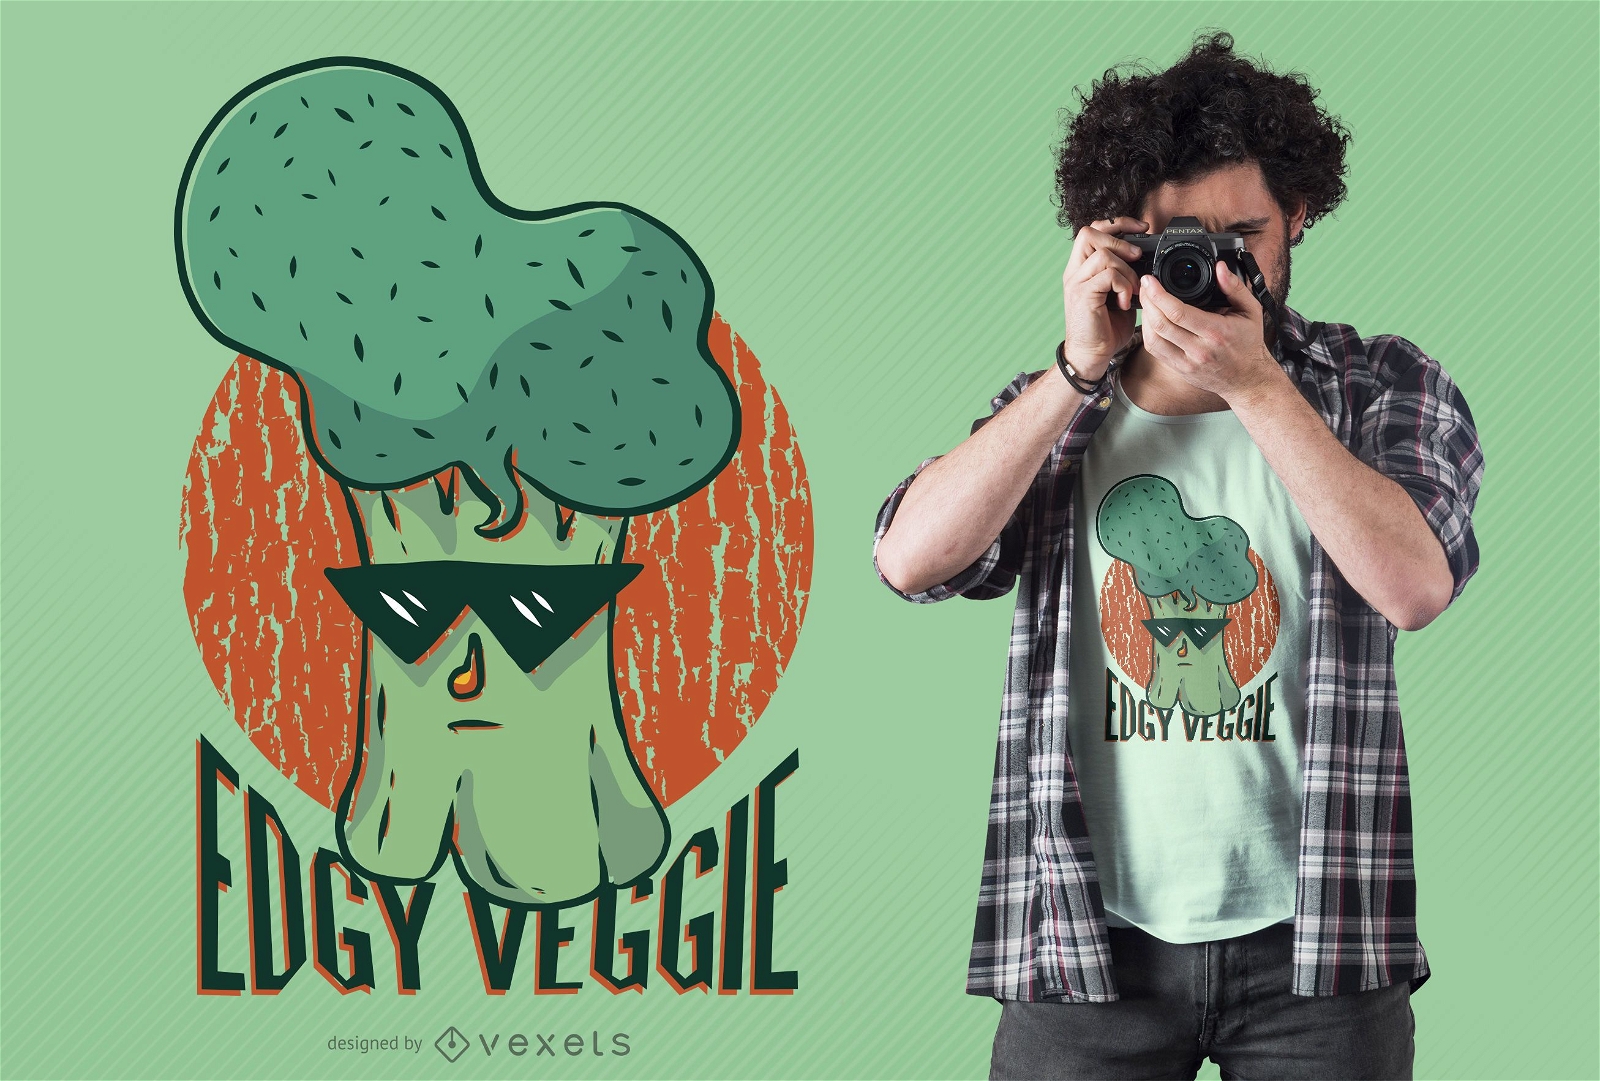 Design Edgy Veggie T-shirt